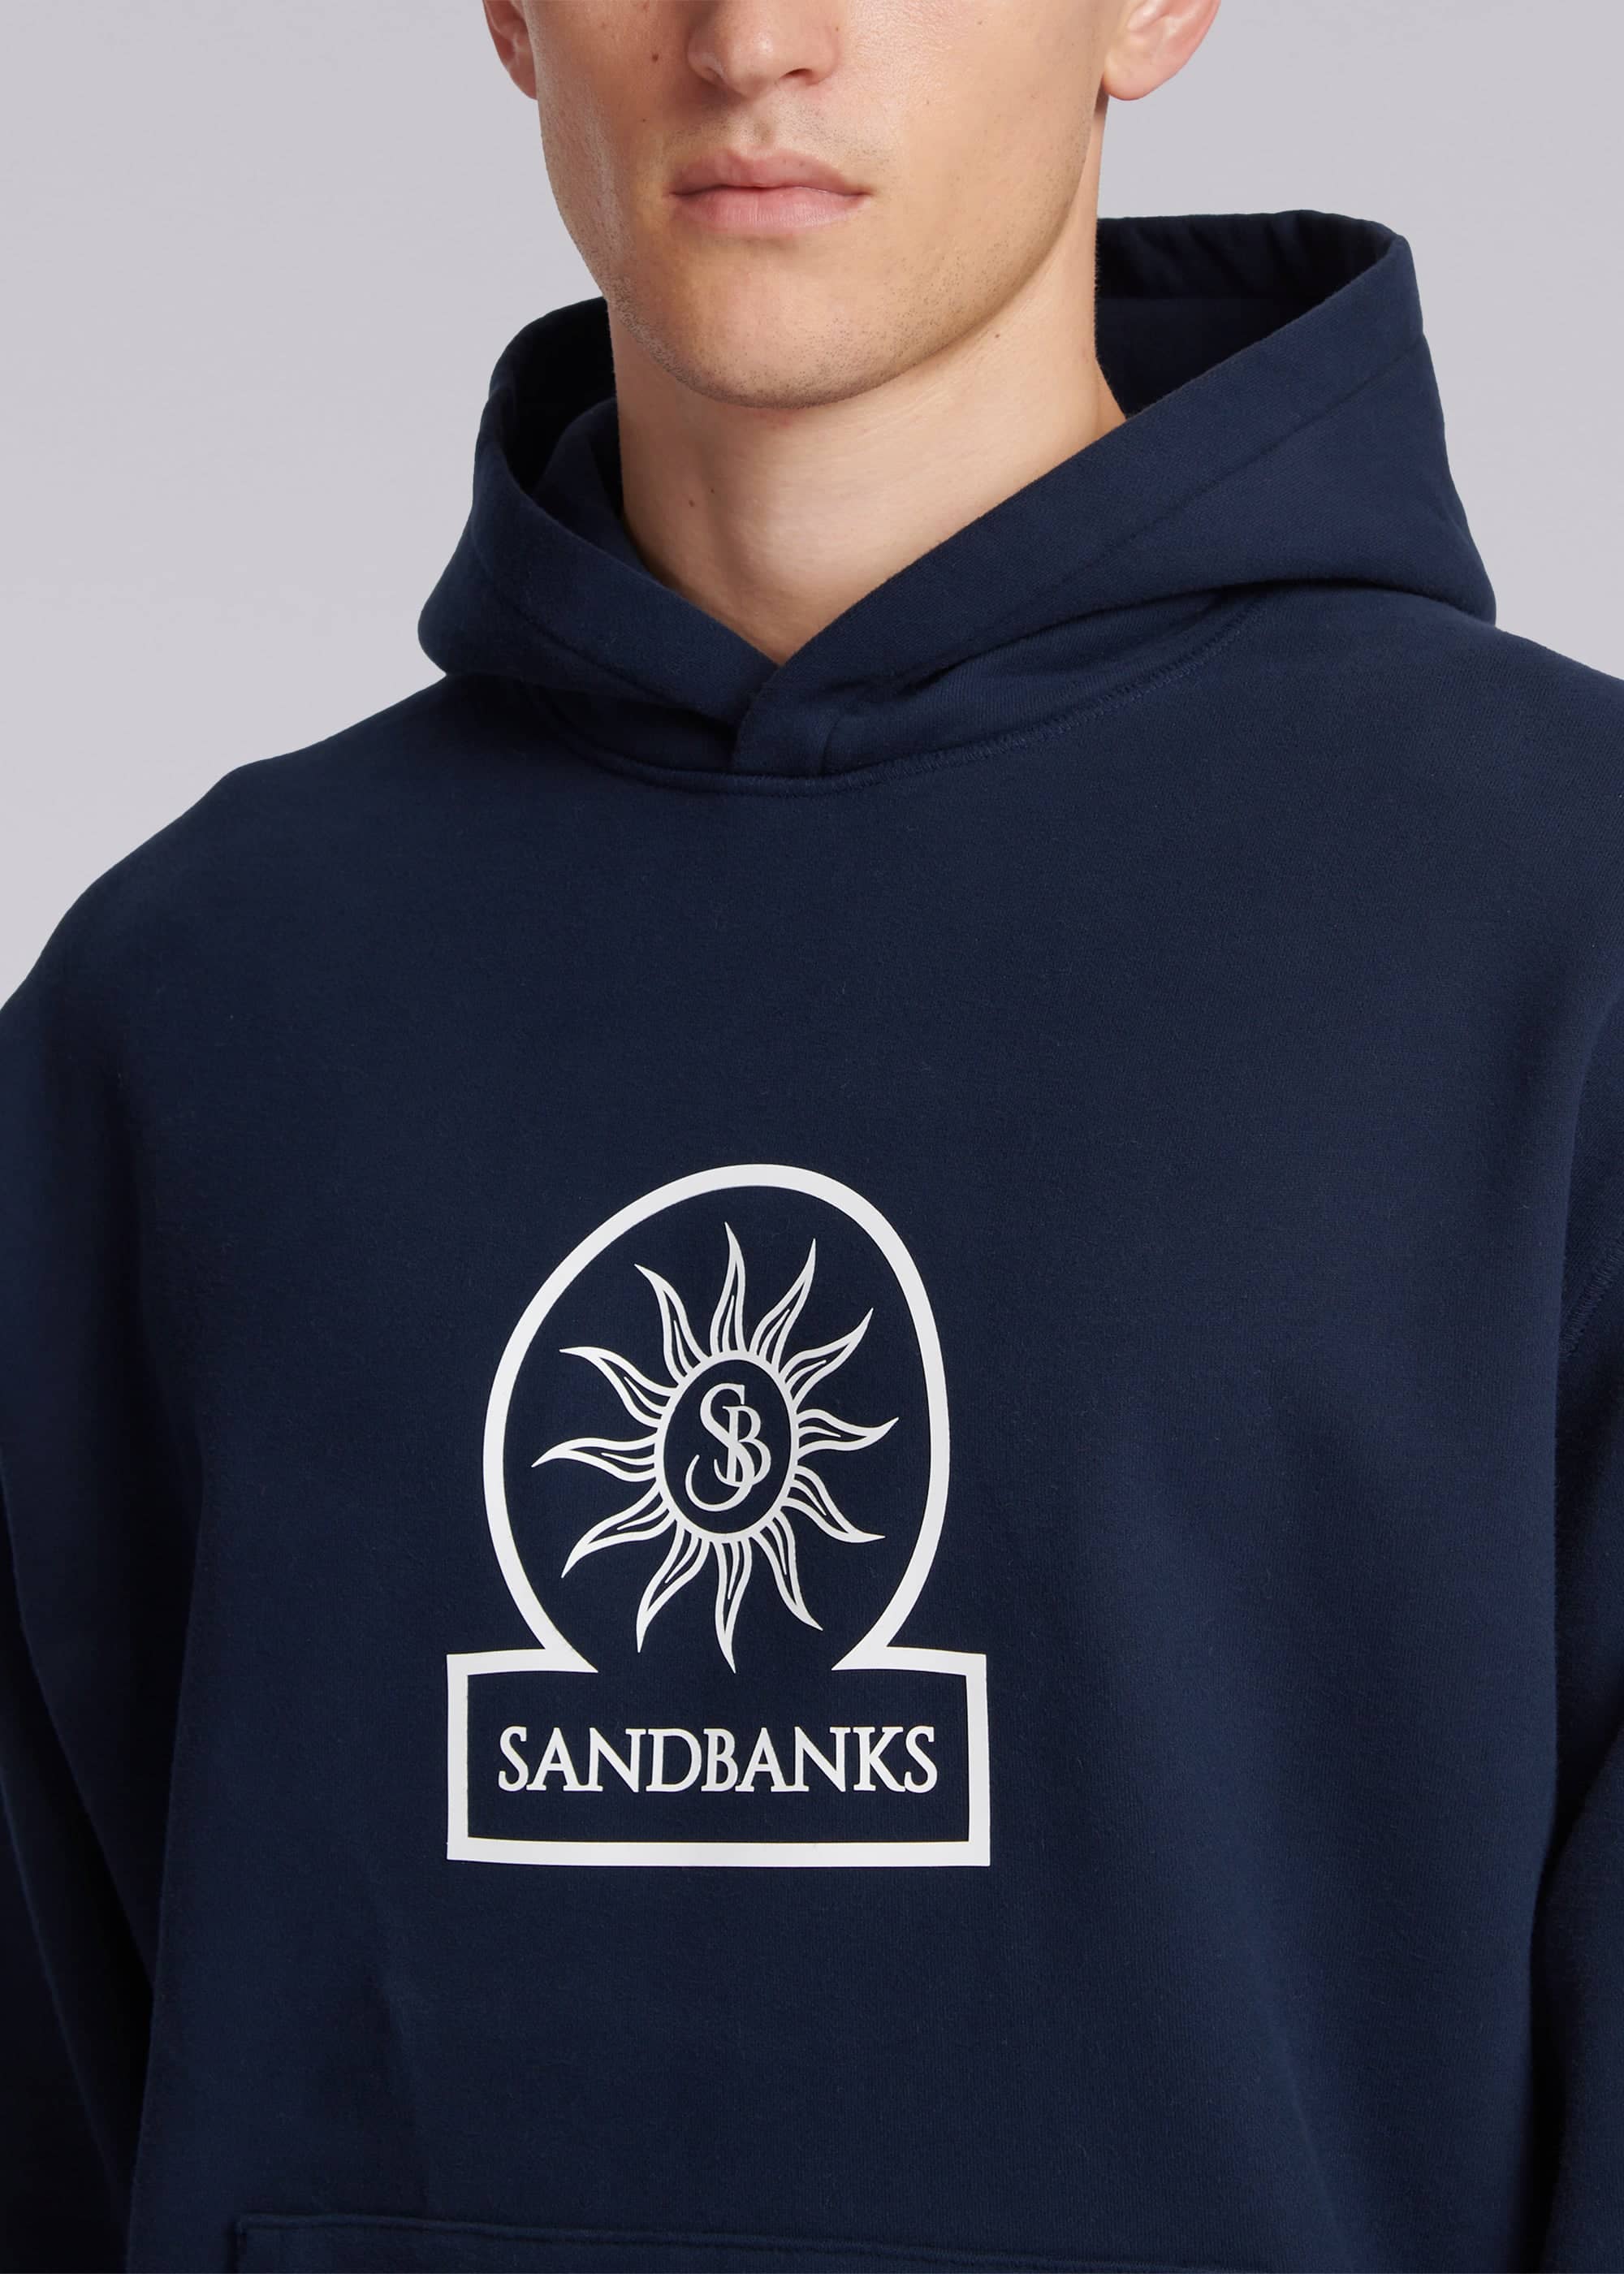 Sandbanks Raised Rubber Logo Hoodie - Navy